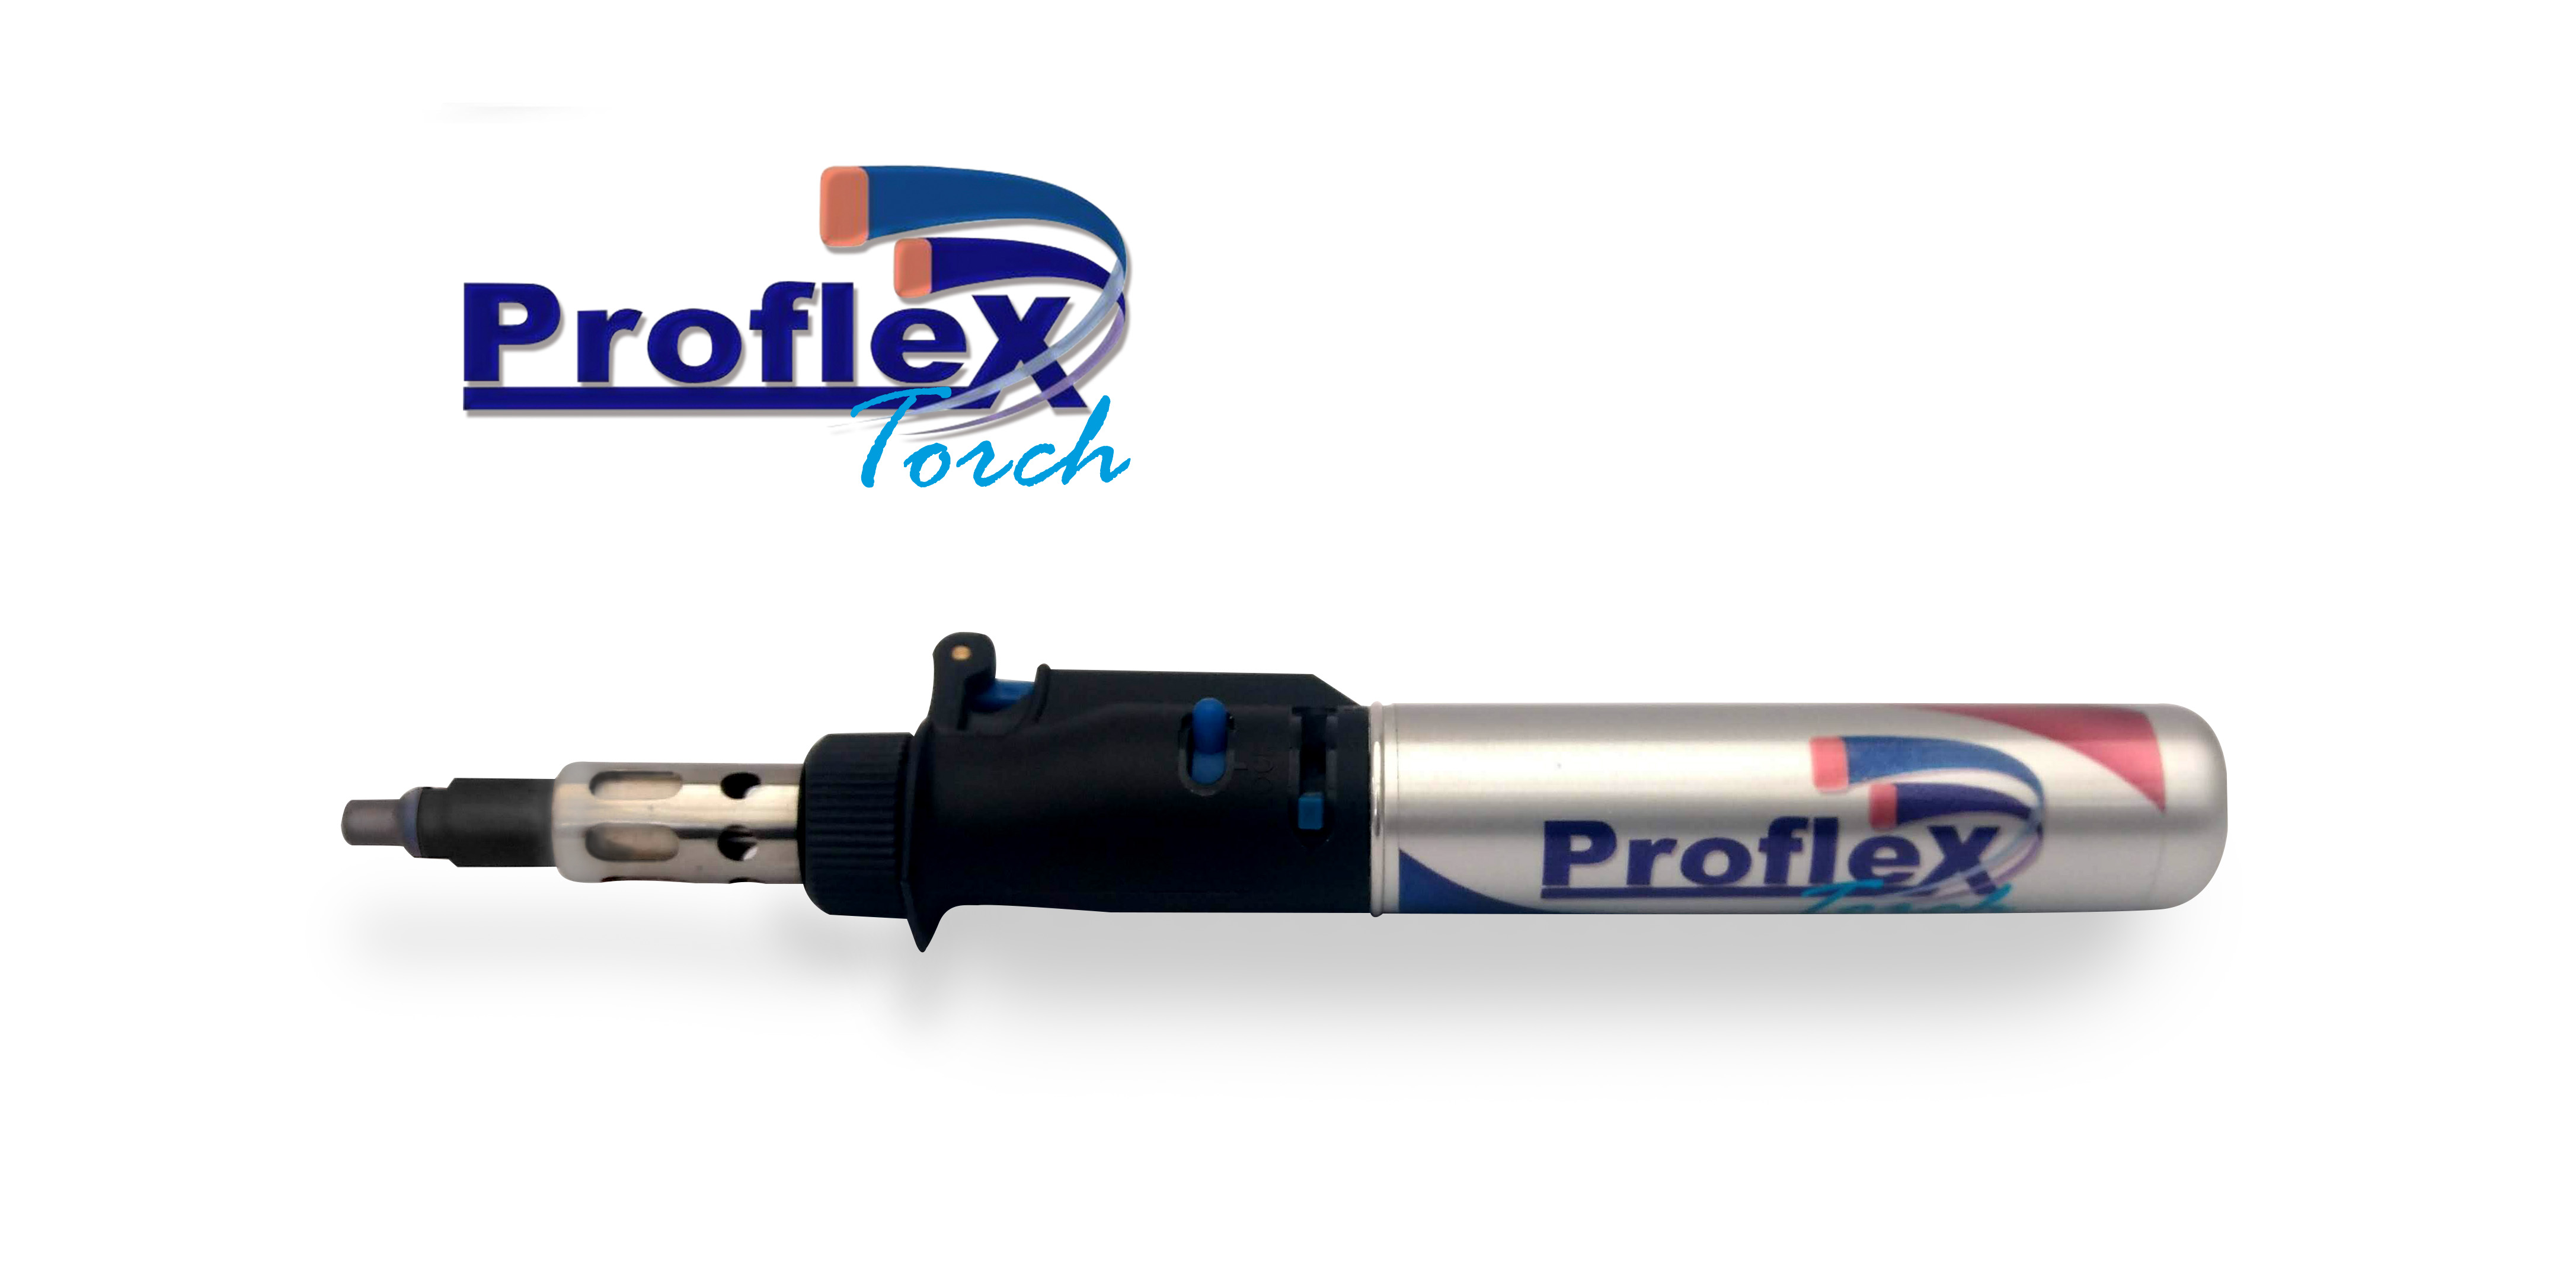 proflex torch Foto